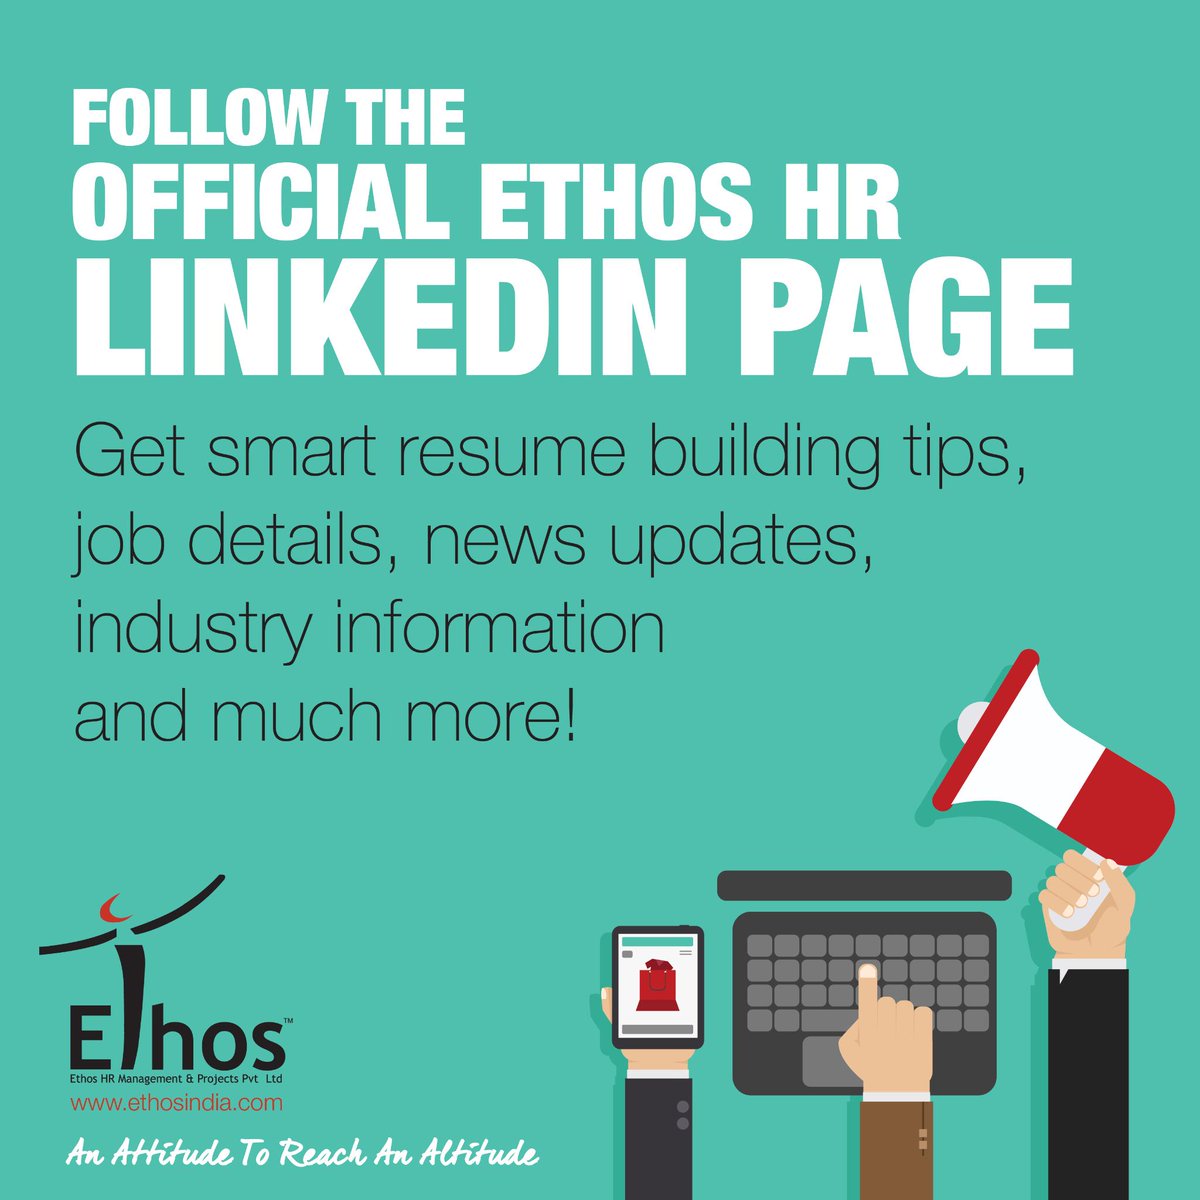 Follow the Official LinkedIn EthosHR Page at: http://t.co/MfBXYVirkj
#TheEthosAltitude http://t.co/8sSBlmALbQ